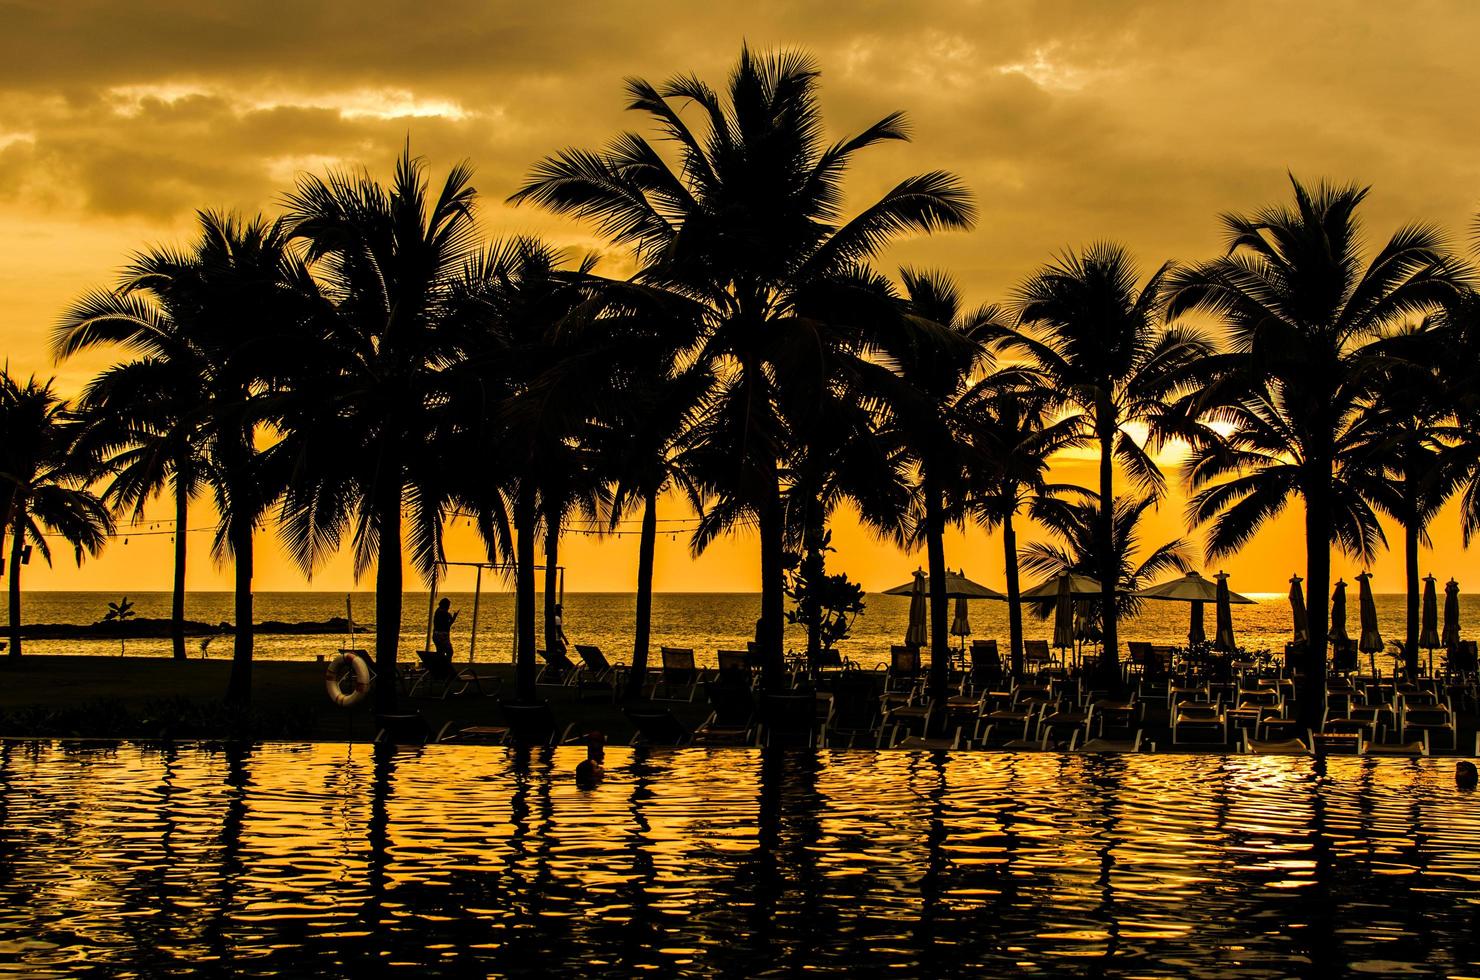 Palm trees silhouettes photo